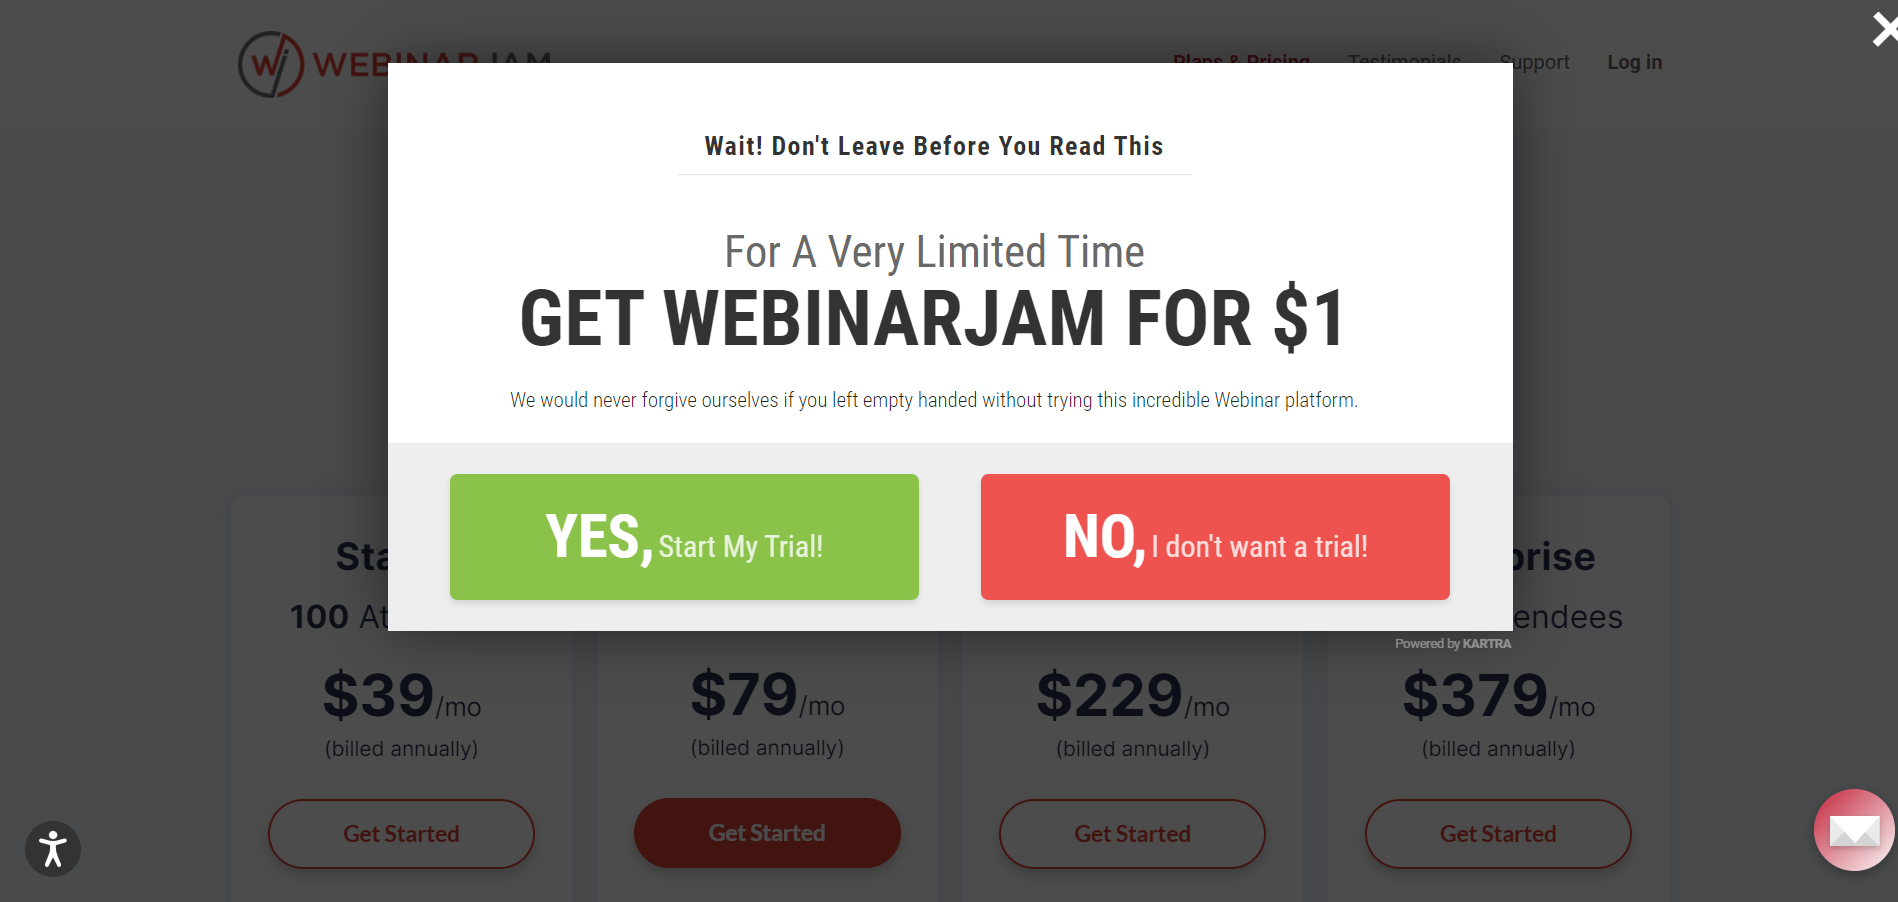 WebinarJam trial for $1